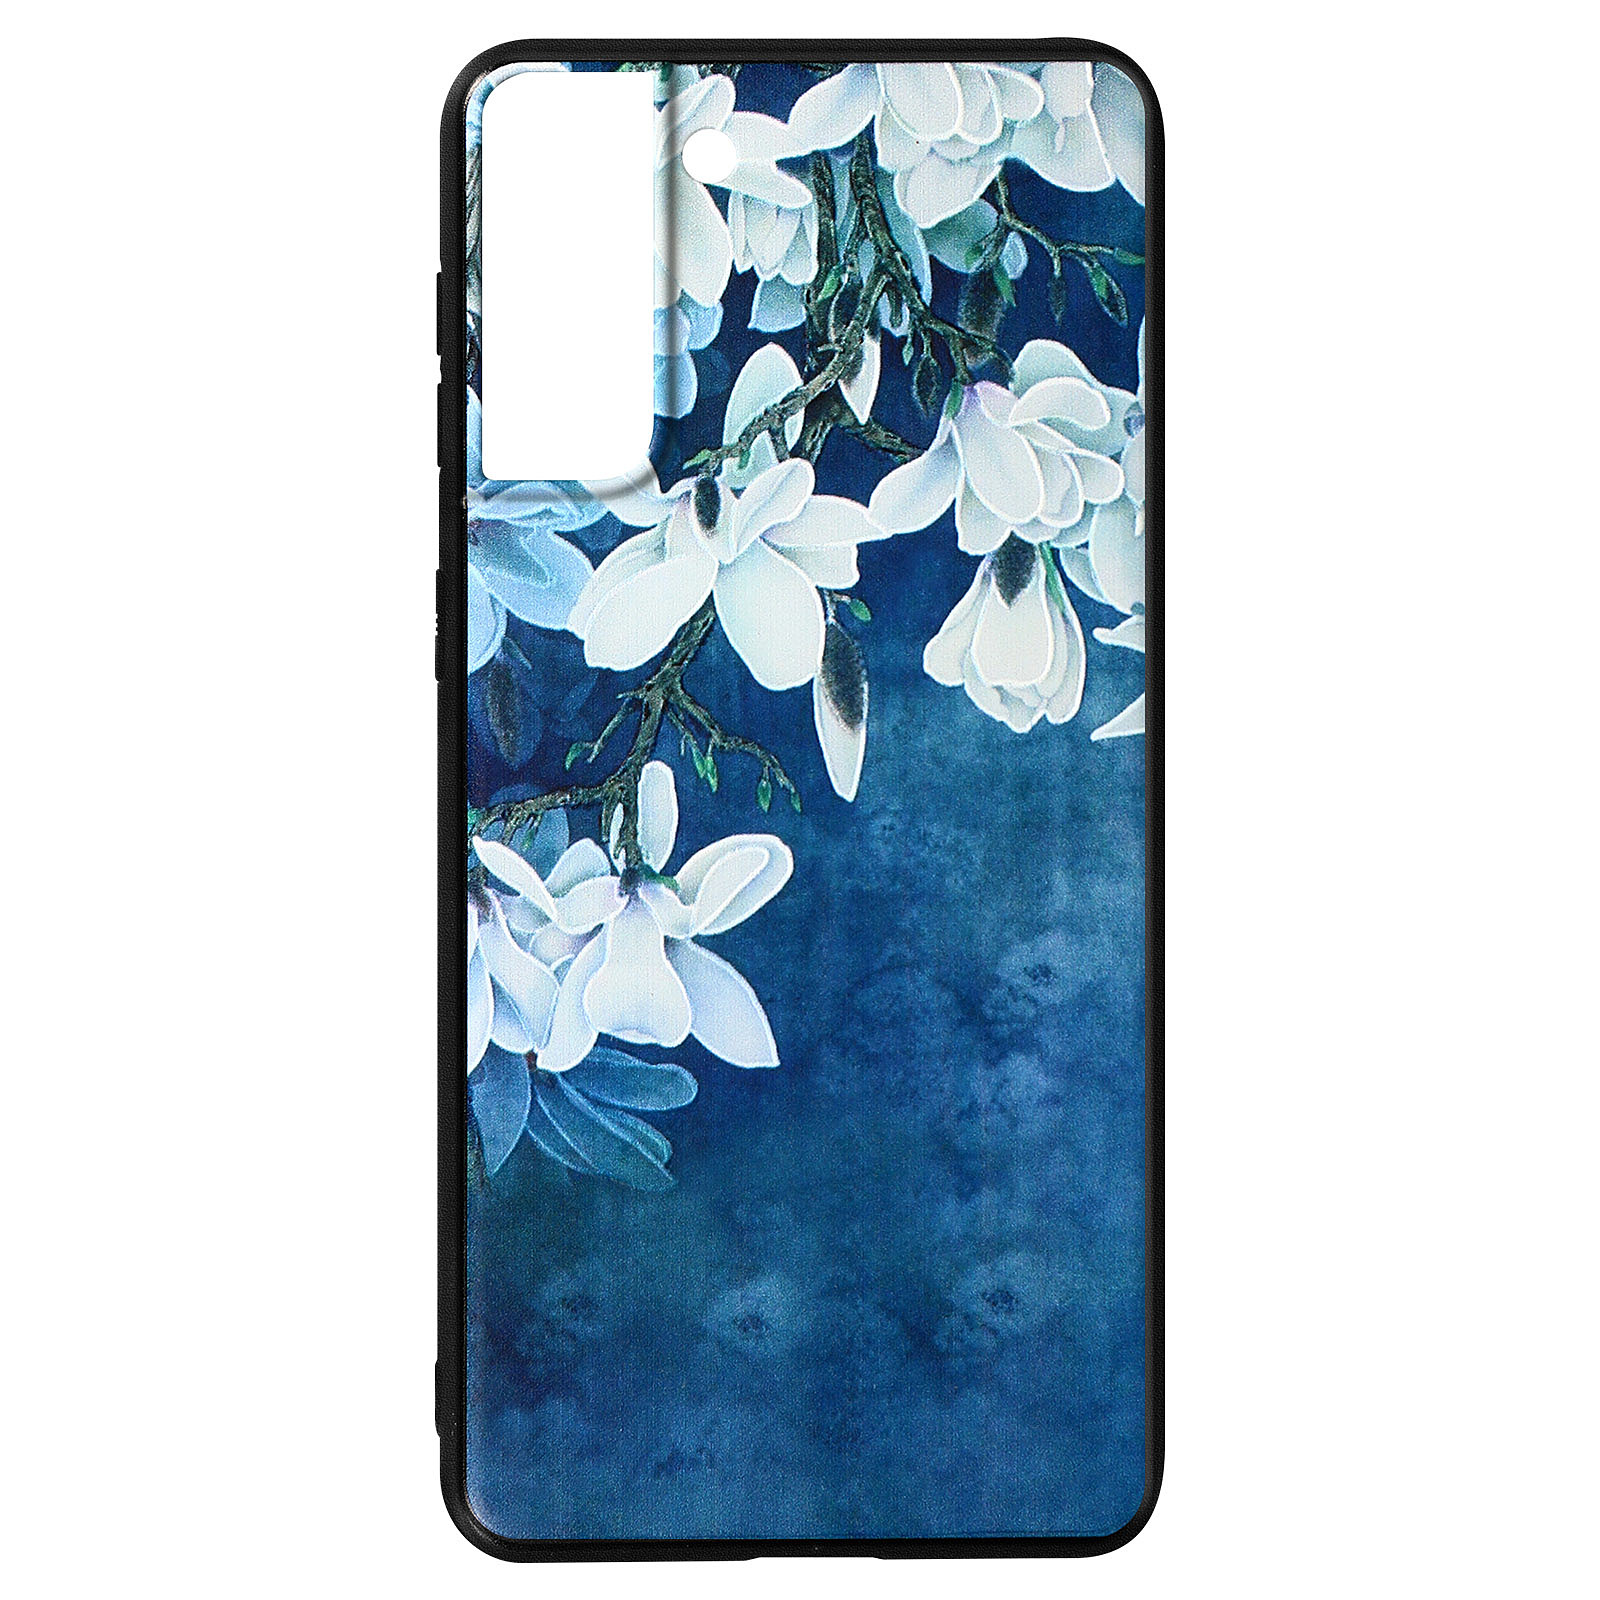 Avizar Coque pour Samsung Galaxy S21 Plus en Silicone gel Imprime fleurs Bleu et Blanc - Coque telephone Avizar